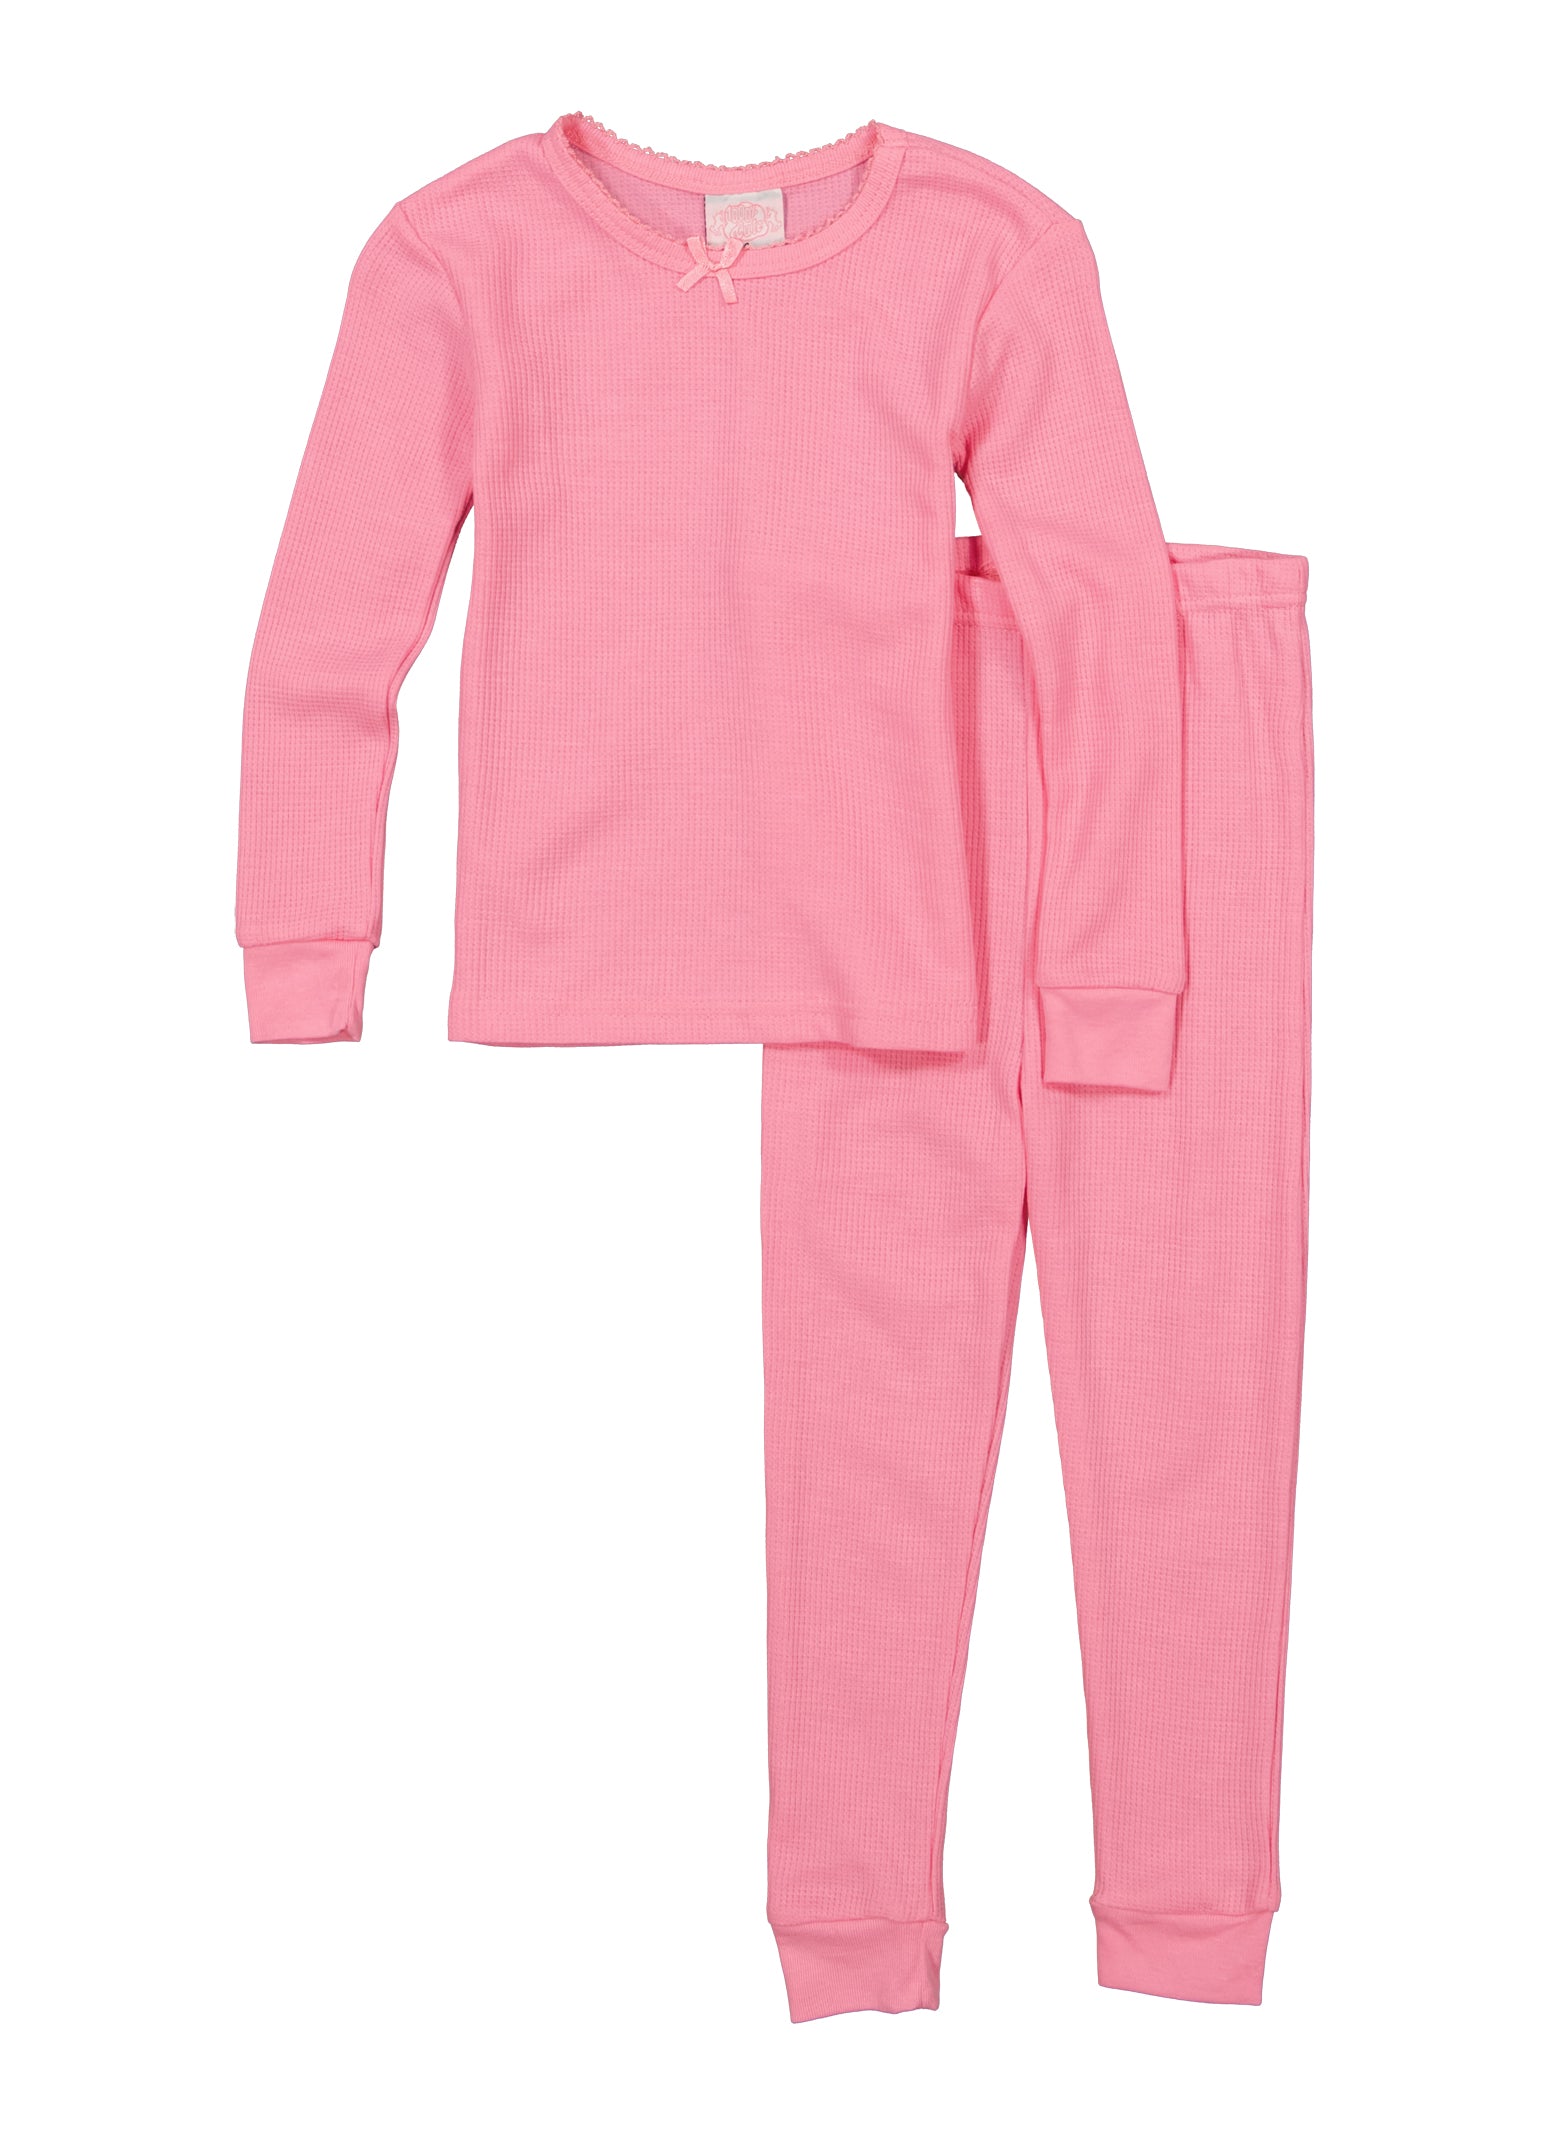 Rainbow Shops Womens Girls Thermal Pajama Top and Pants, 4